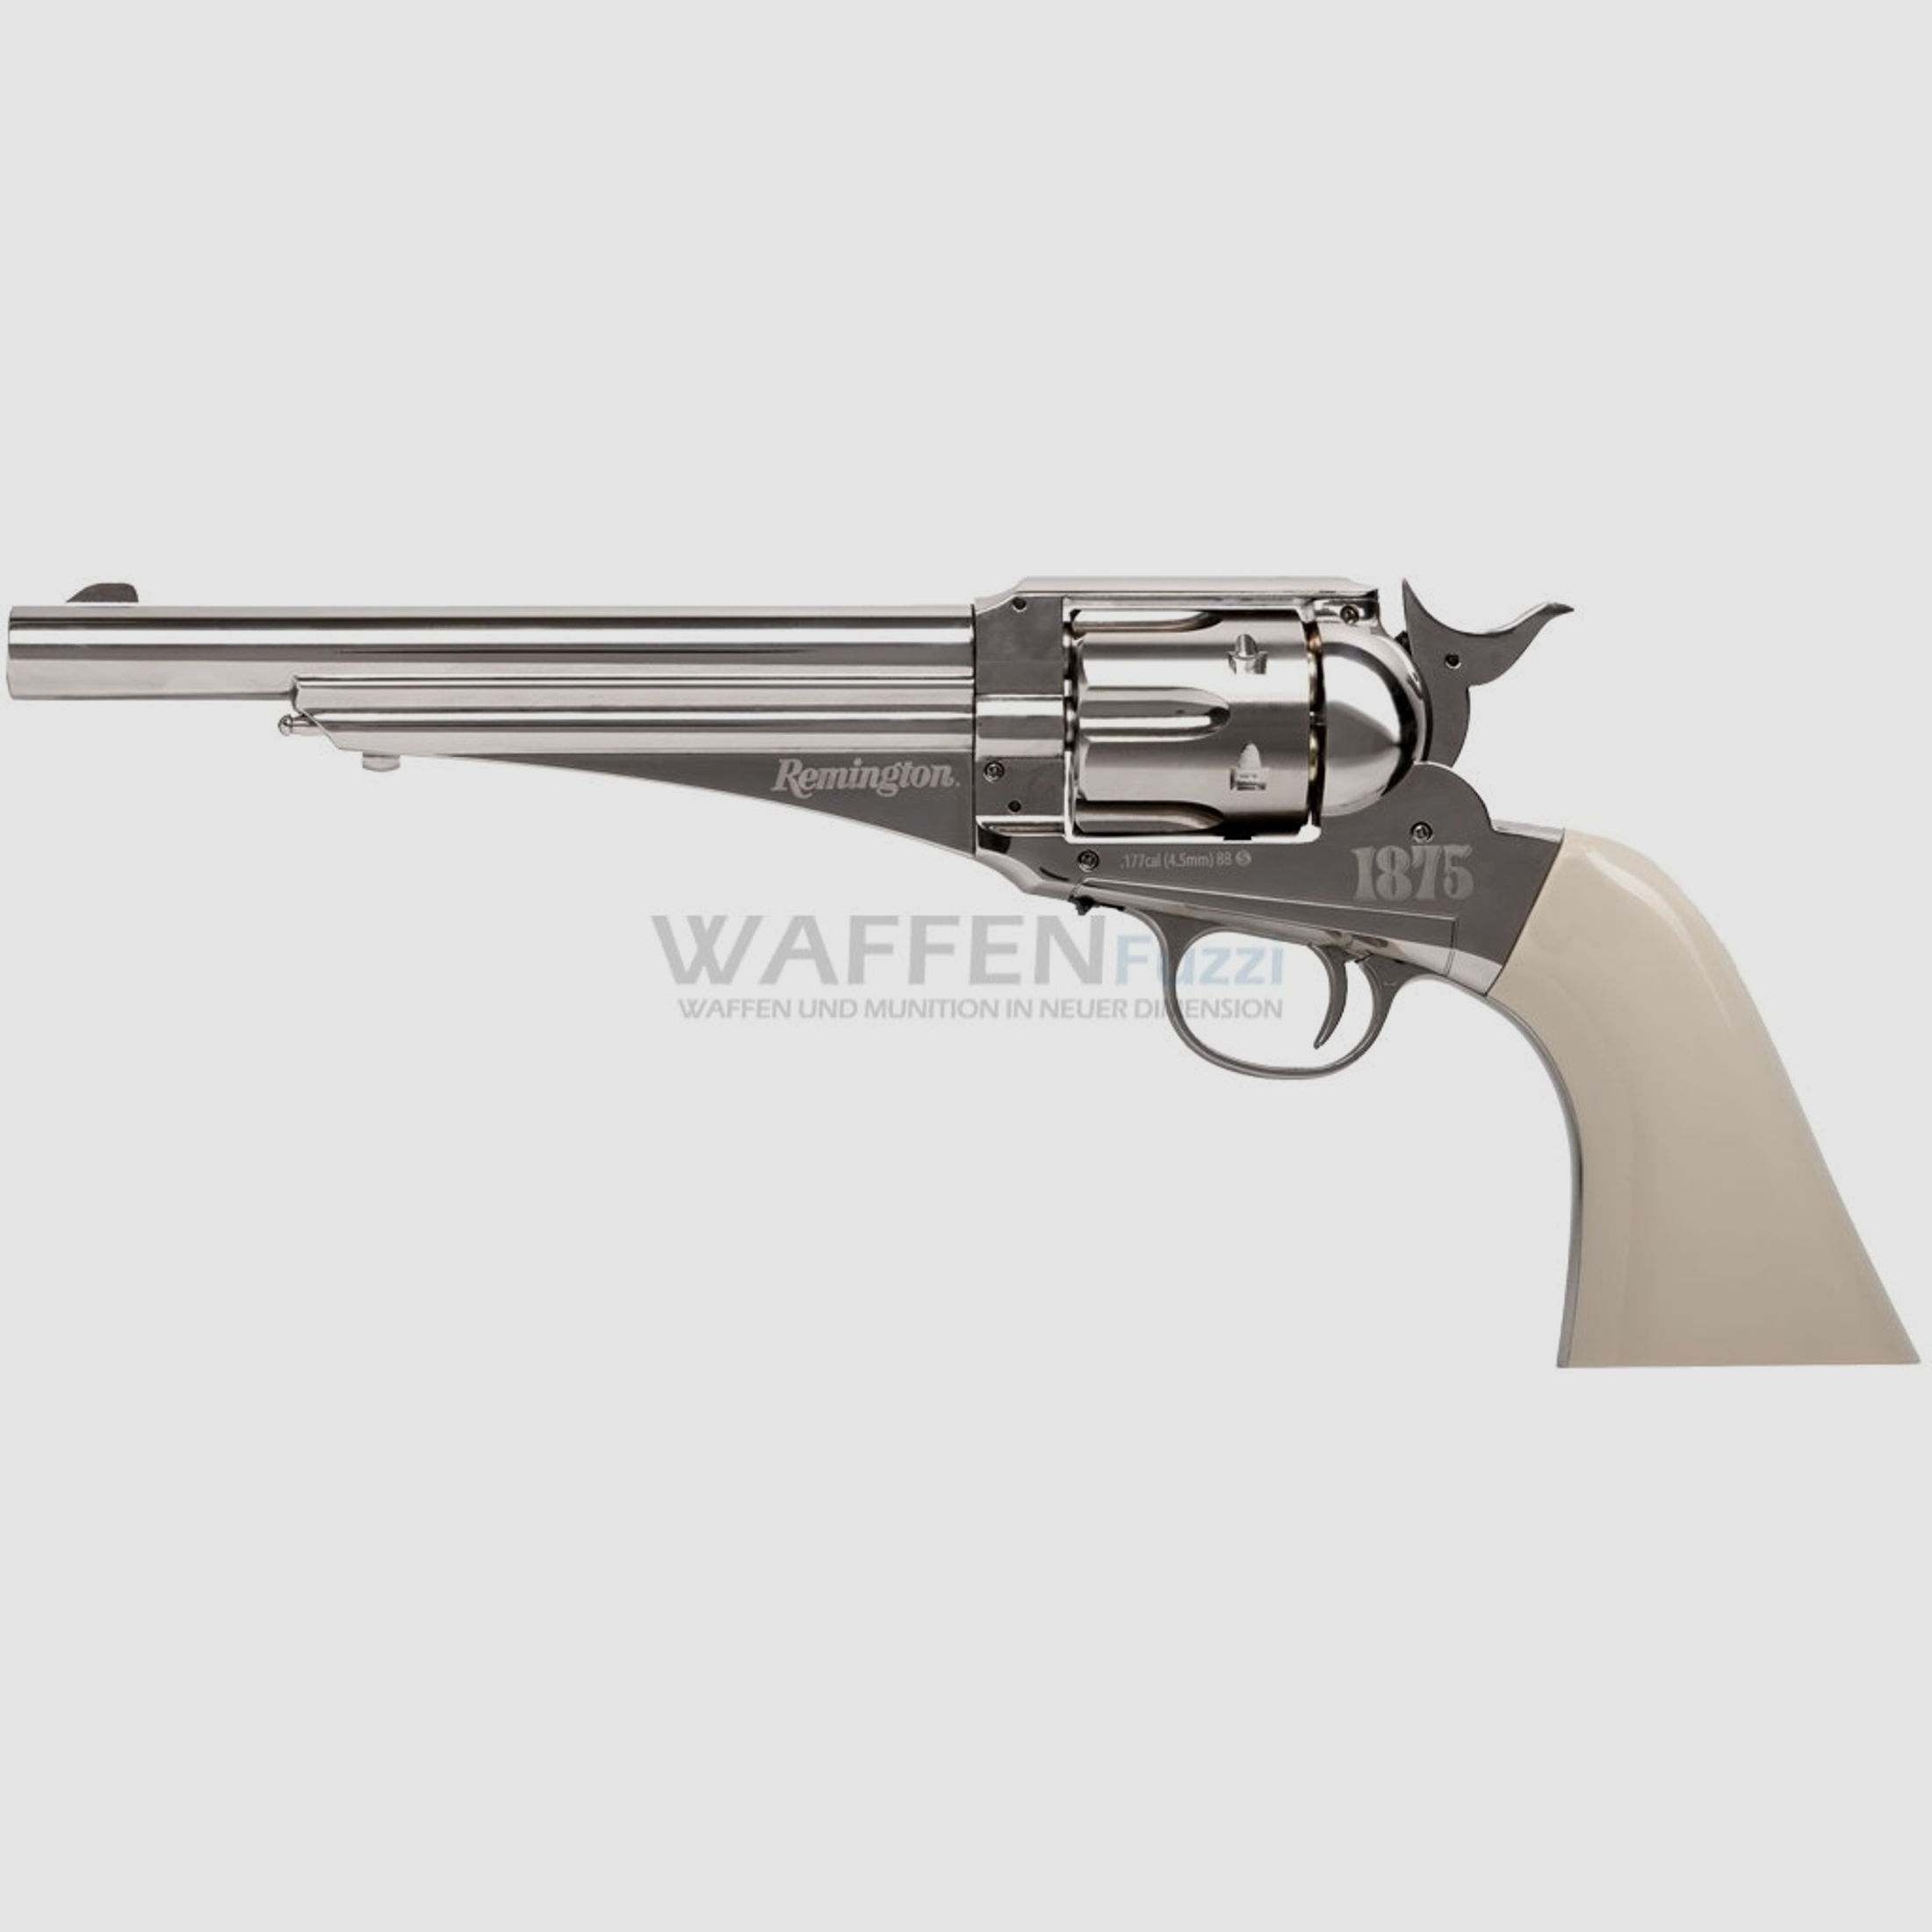 Remington Modell 1875 CO2 Revolver Kaliber 4,5mm Stahl BB